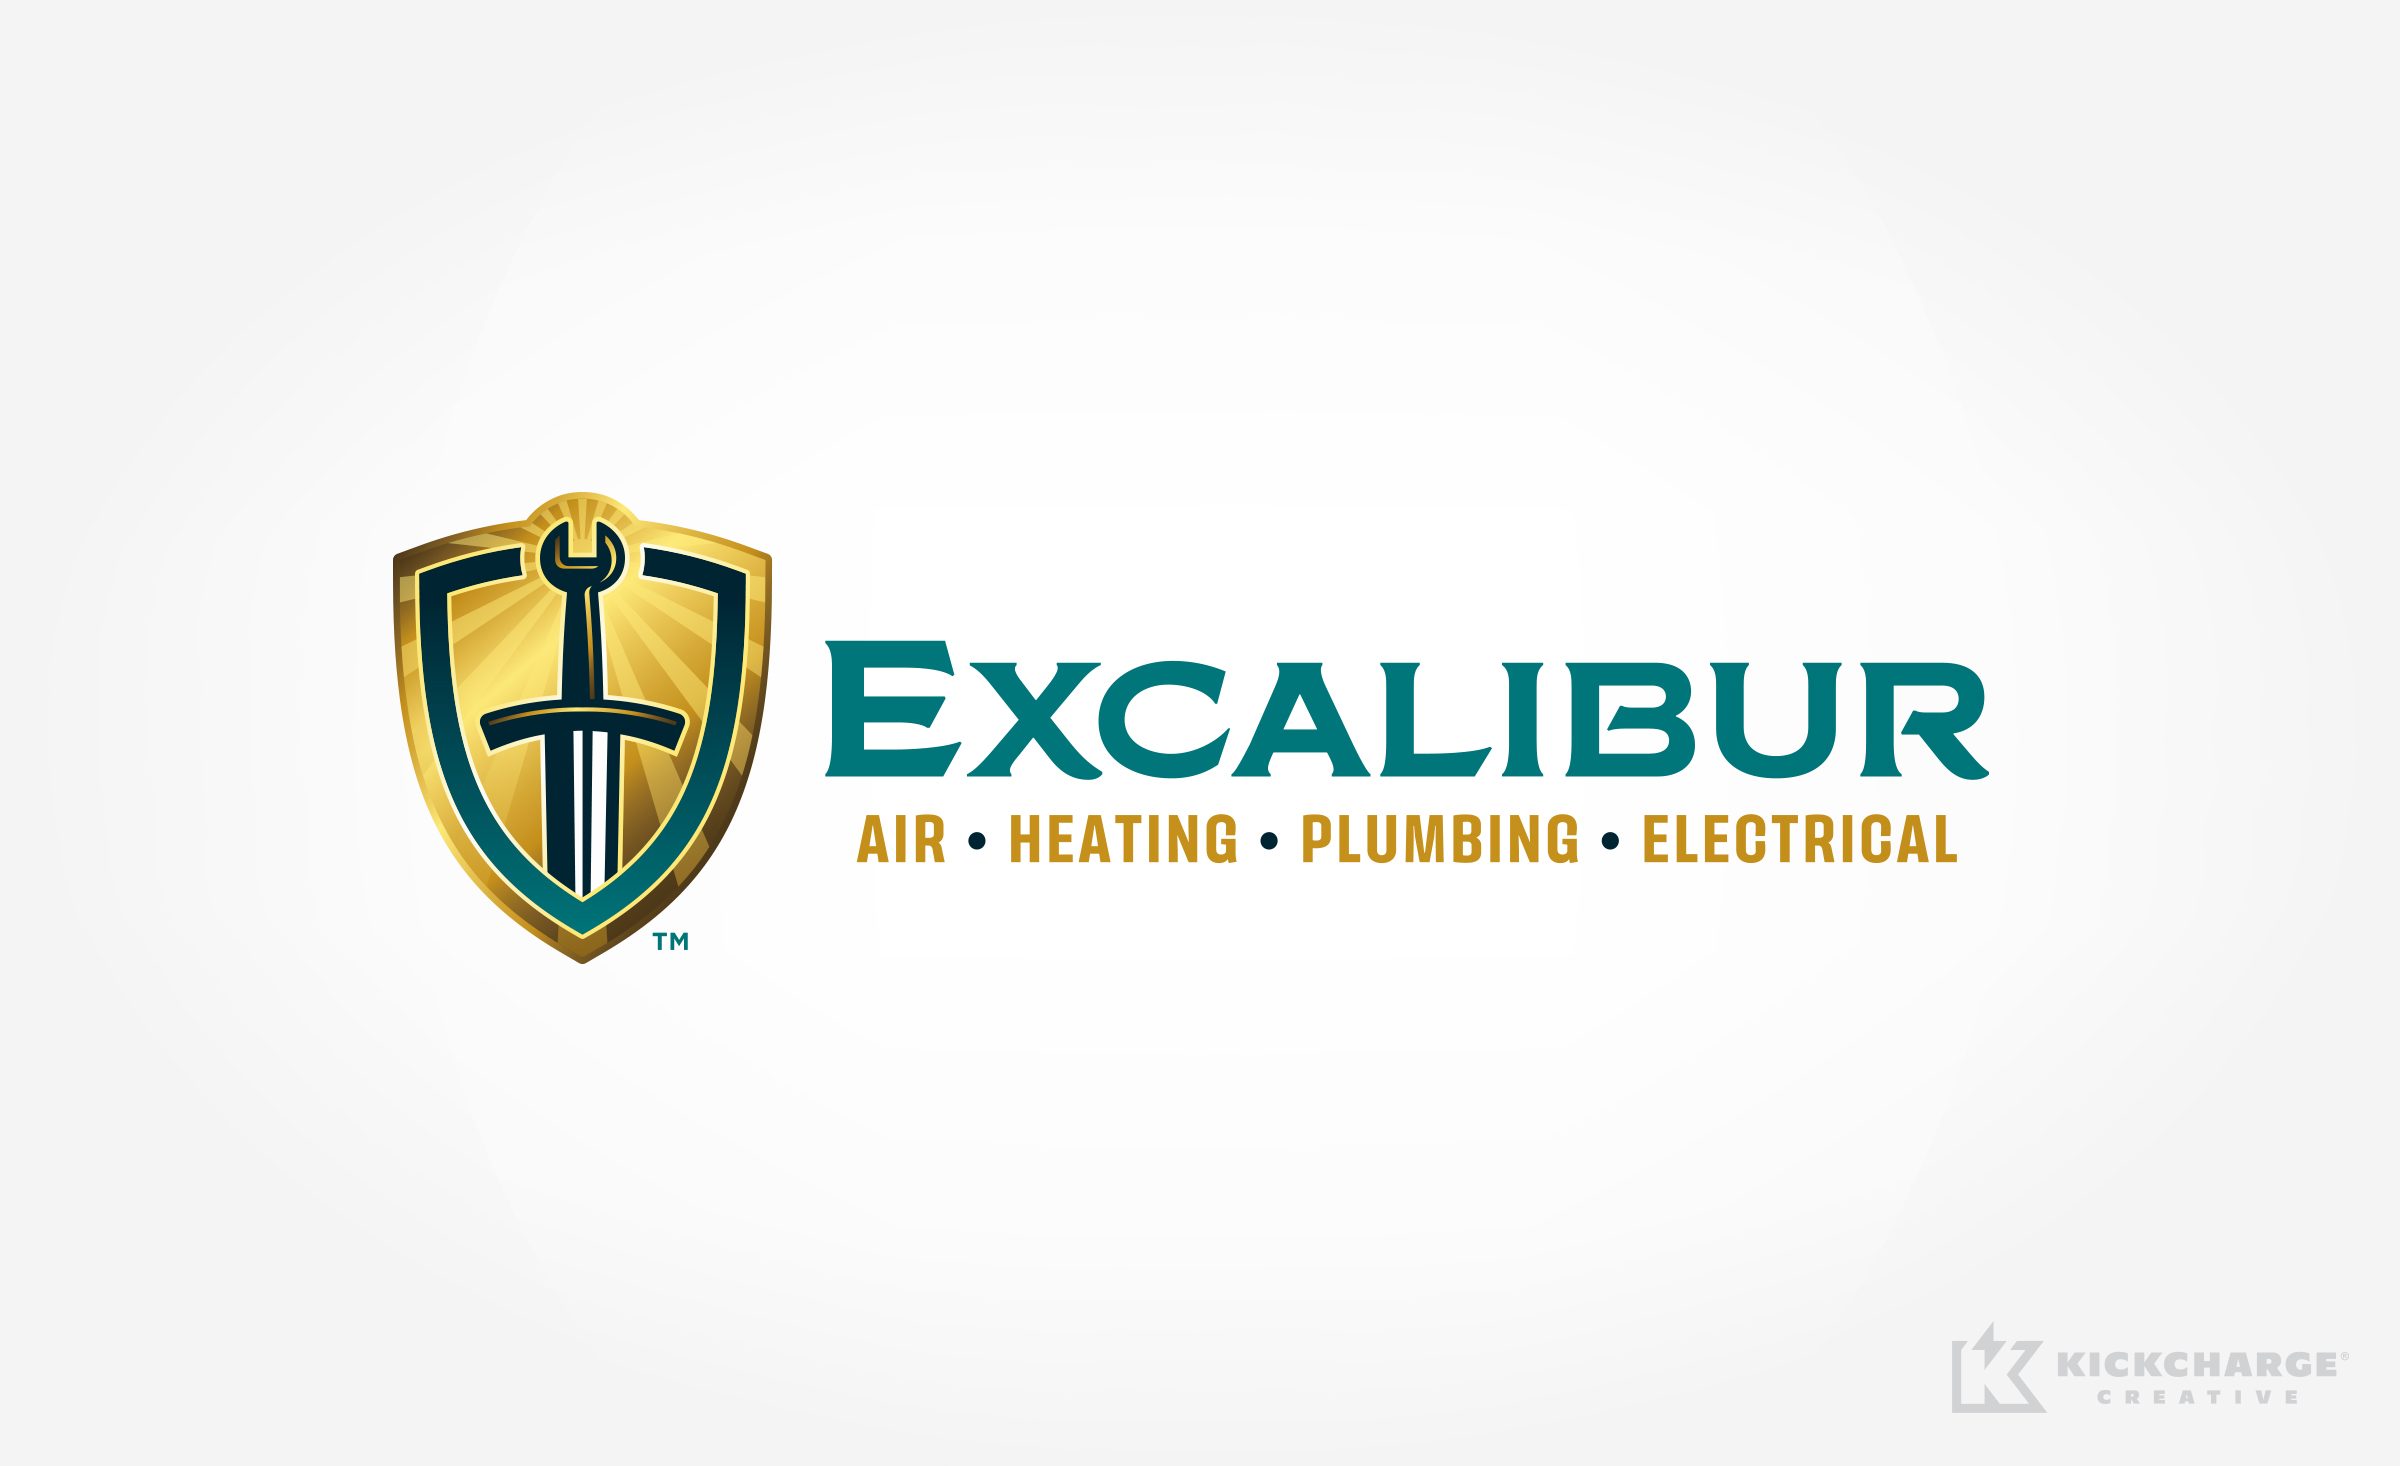 hvac and plumbing logo design for Excalibur